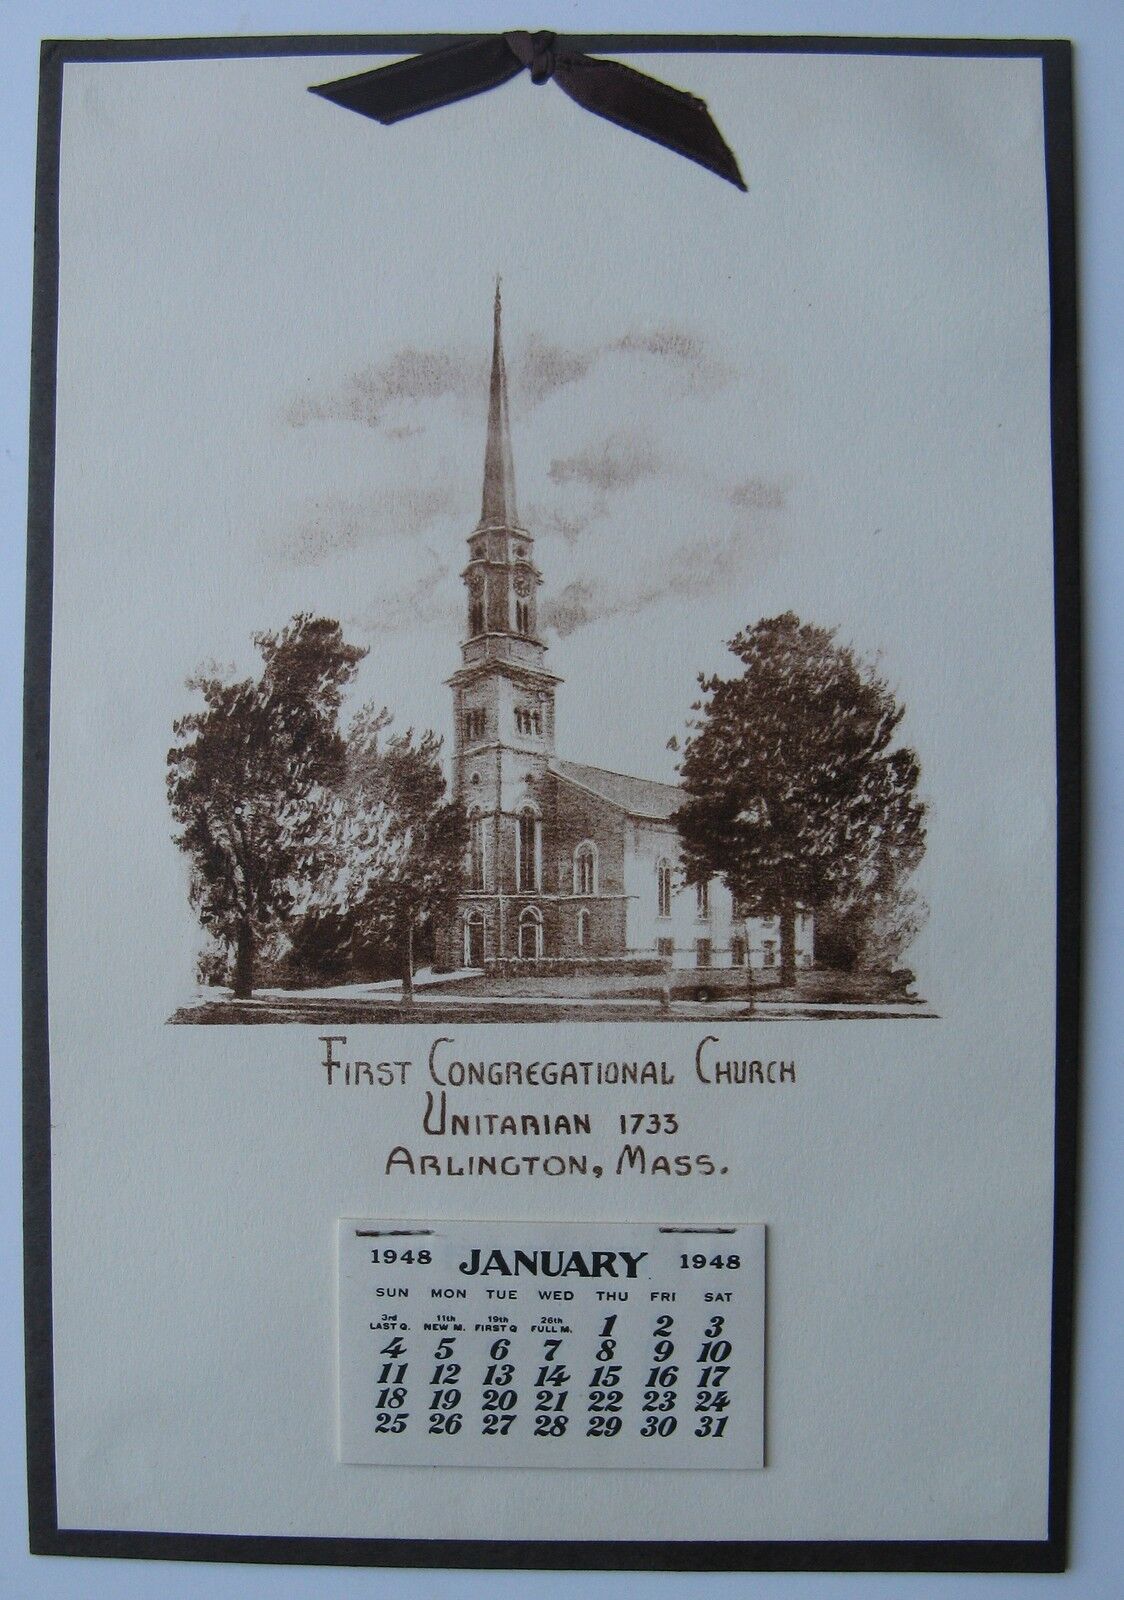 Arlington Ma 1948 First Congregational Church (Unitarian) Calendar with envelope